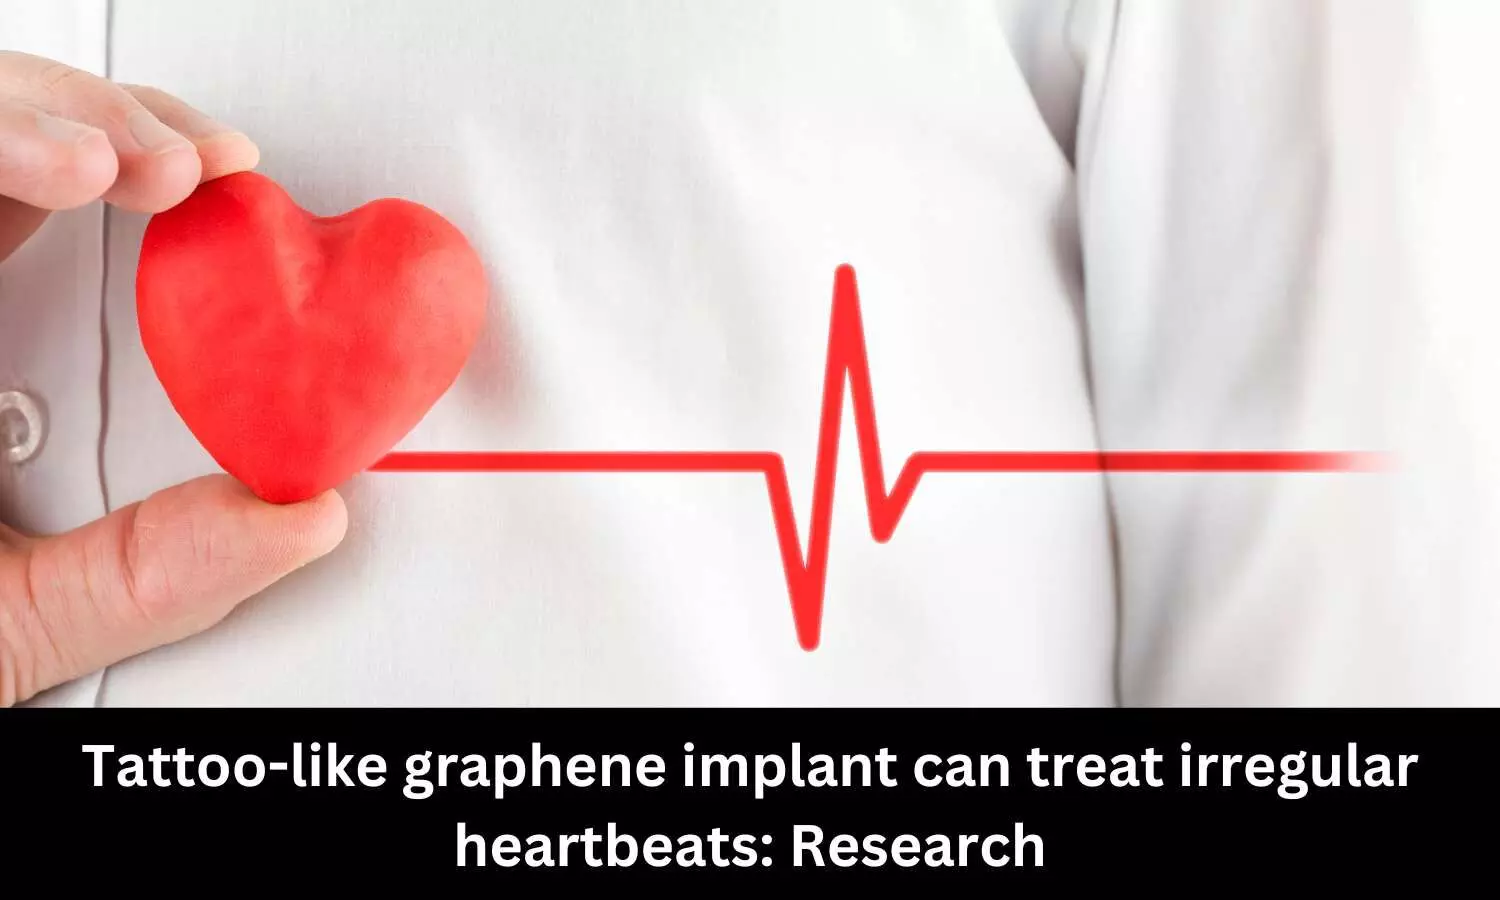 Tattoo-like graphene implant can treat irregular heartbeats: Research